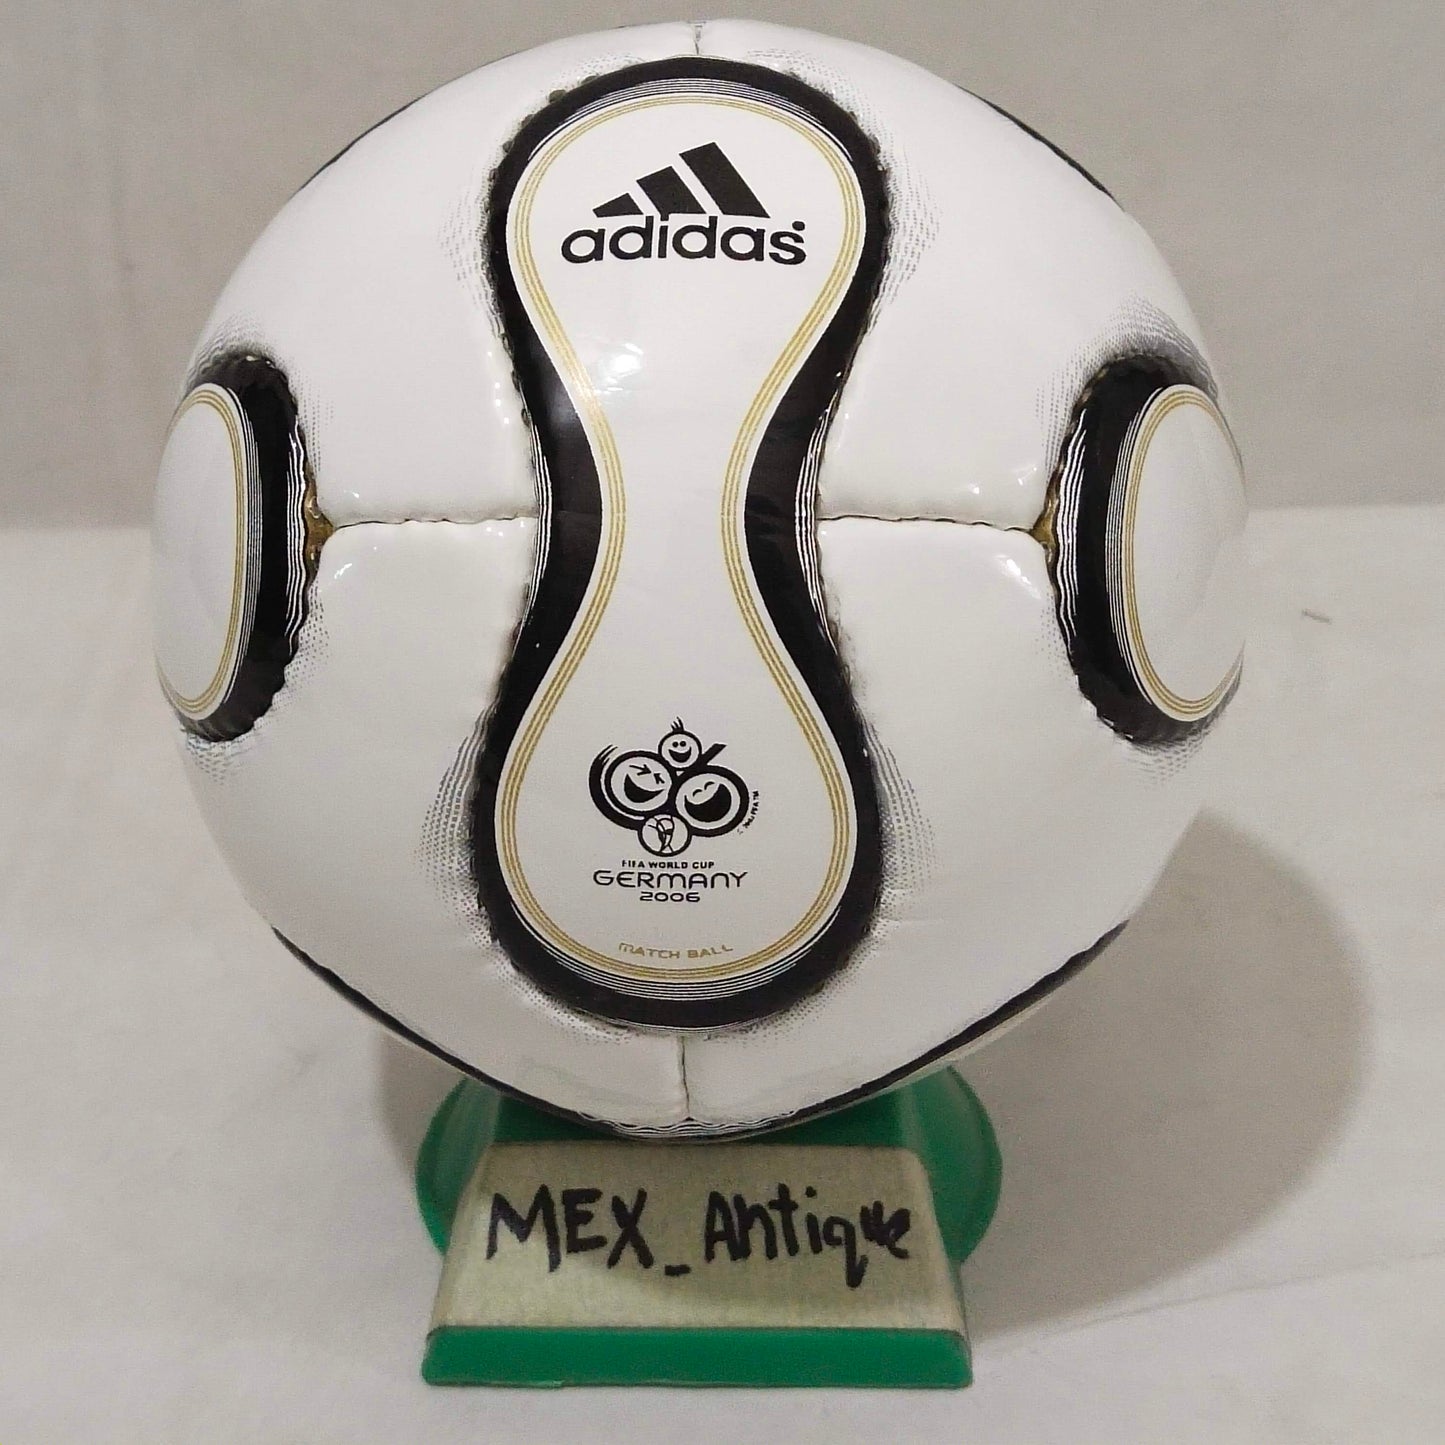 Adidas Teamgeist MINI Ball | 2006 FIFA World Cup Ball 01